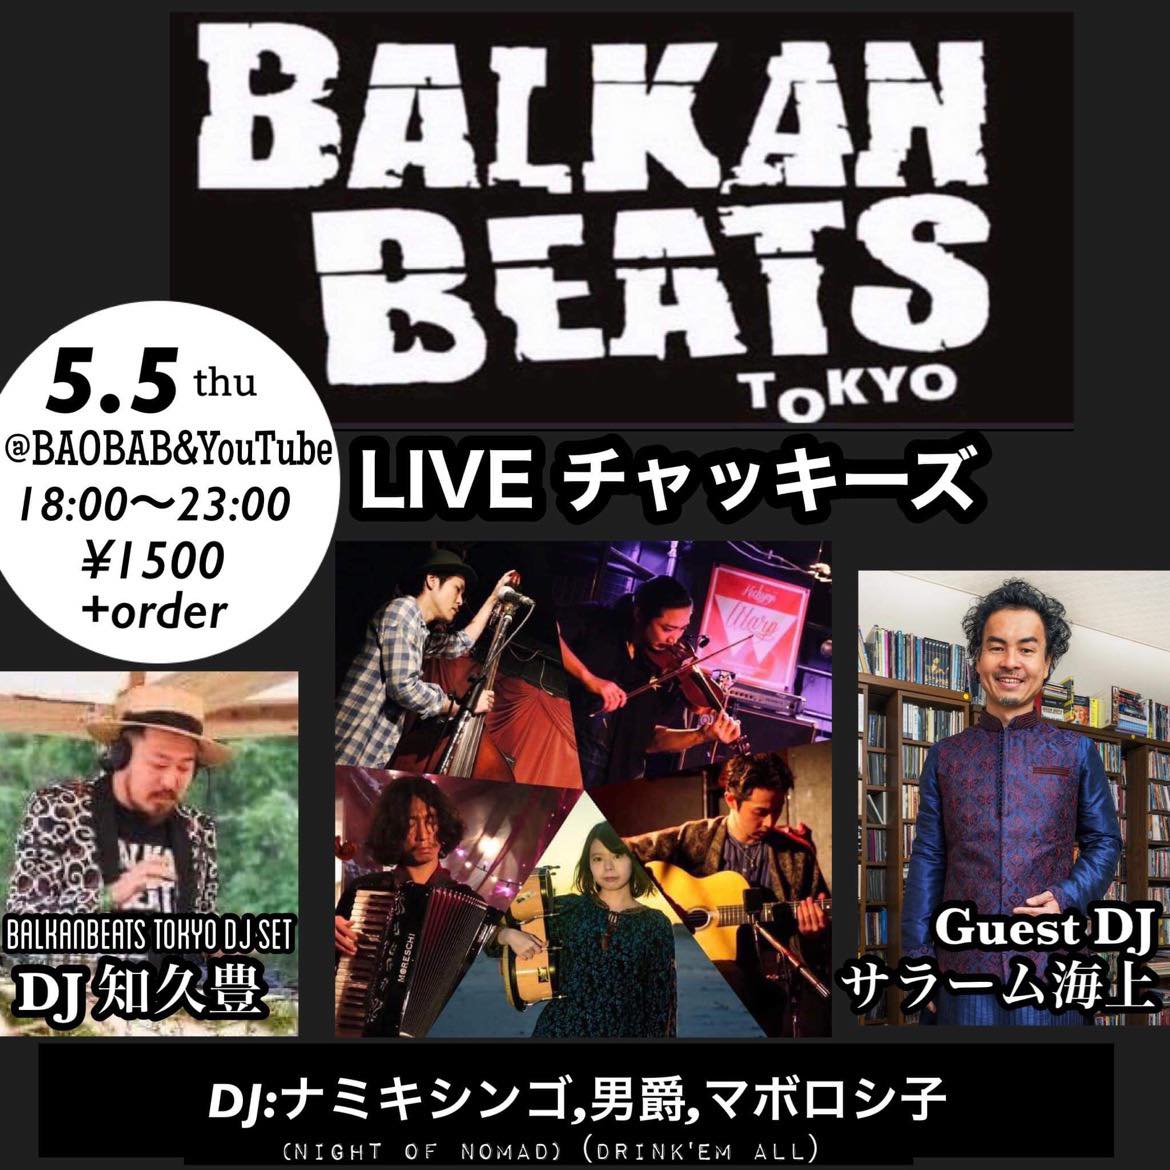 20220505Thu. SALAM DJ @ BALKANBEATS TOKYO 吉祥寺baobab